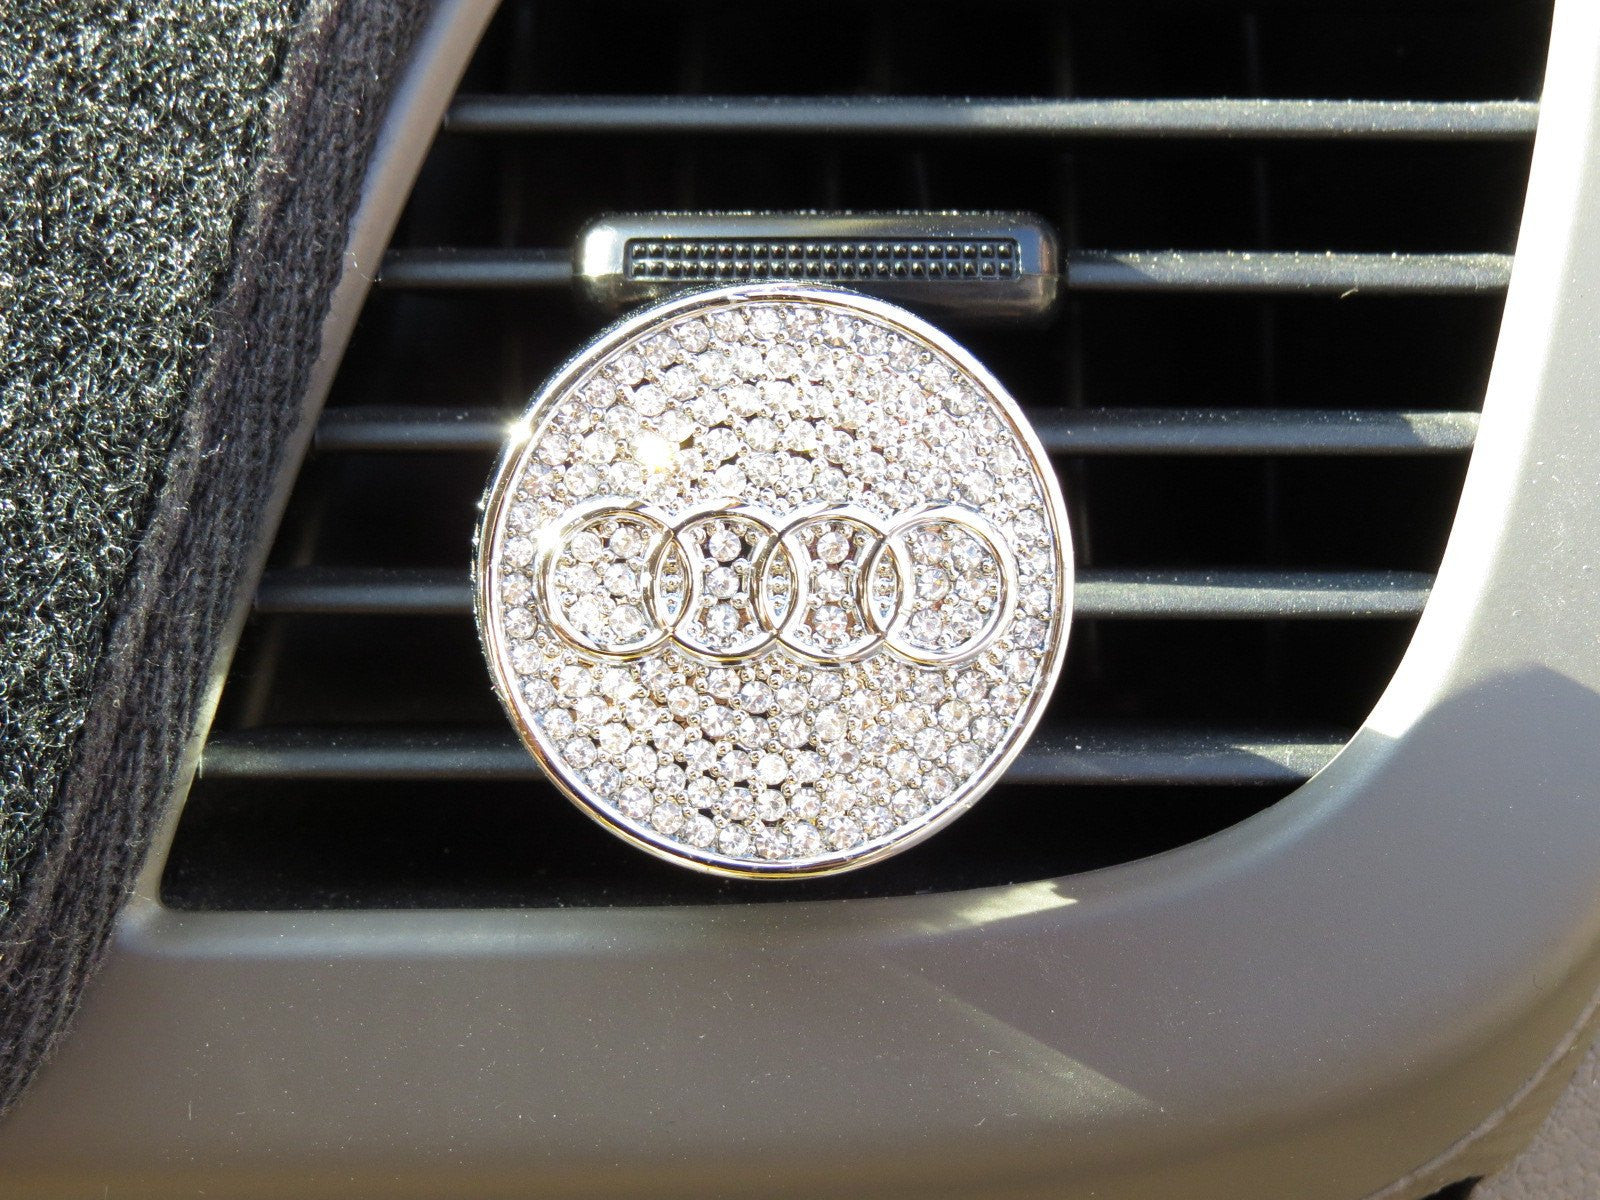 Pinalloy Car Air Freshener Fragrance Perfume with Audi Emblem Logo - Pinalloy Online Auto Accessories Lightweight Car Kit 